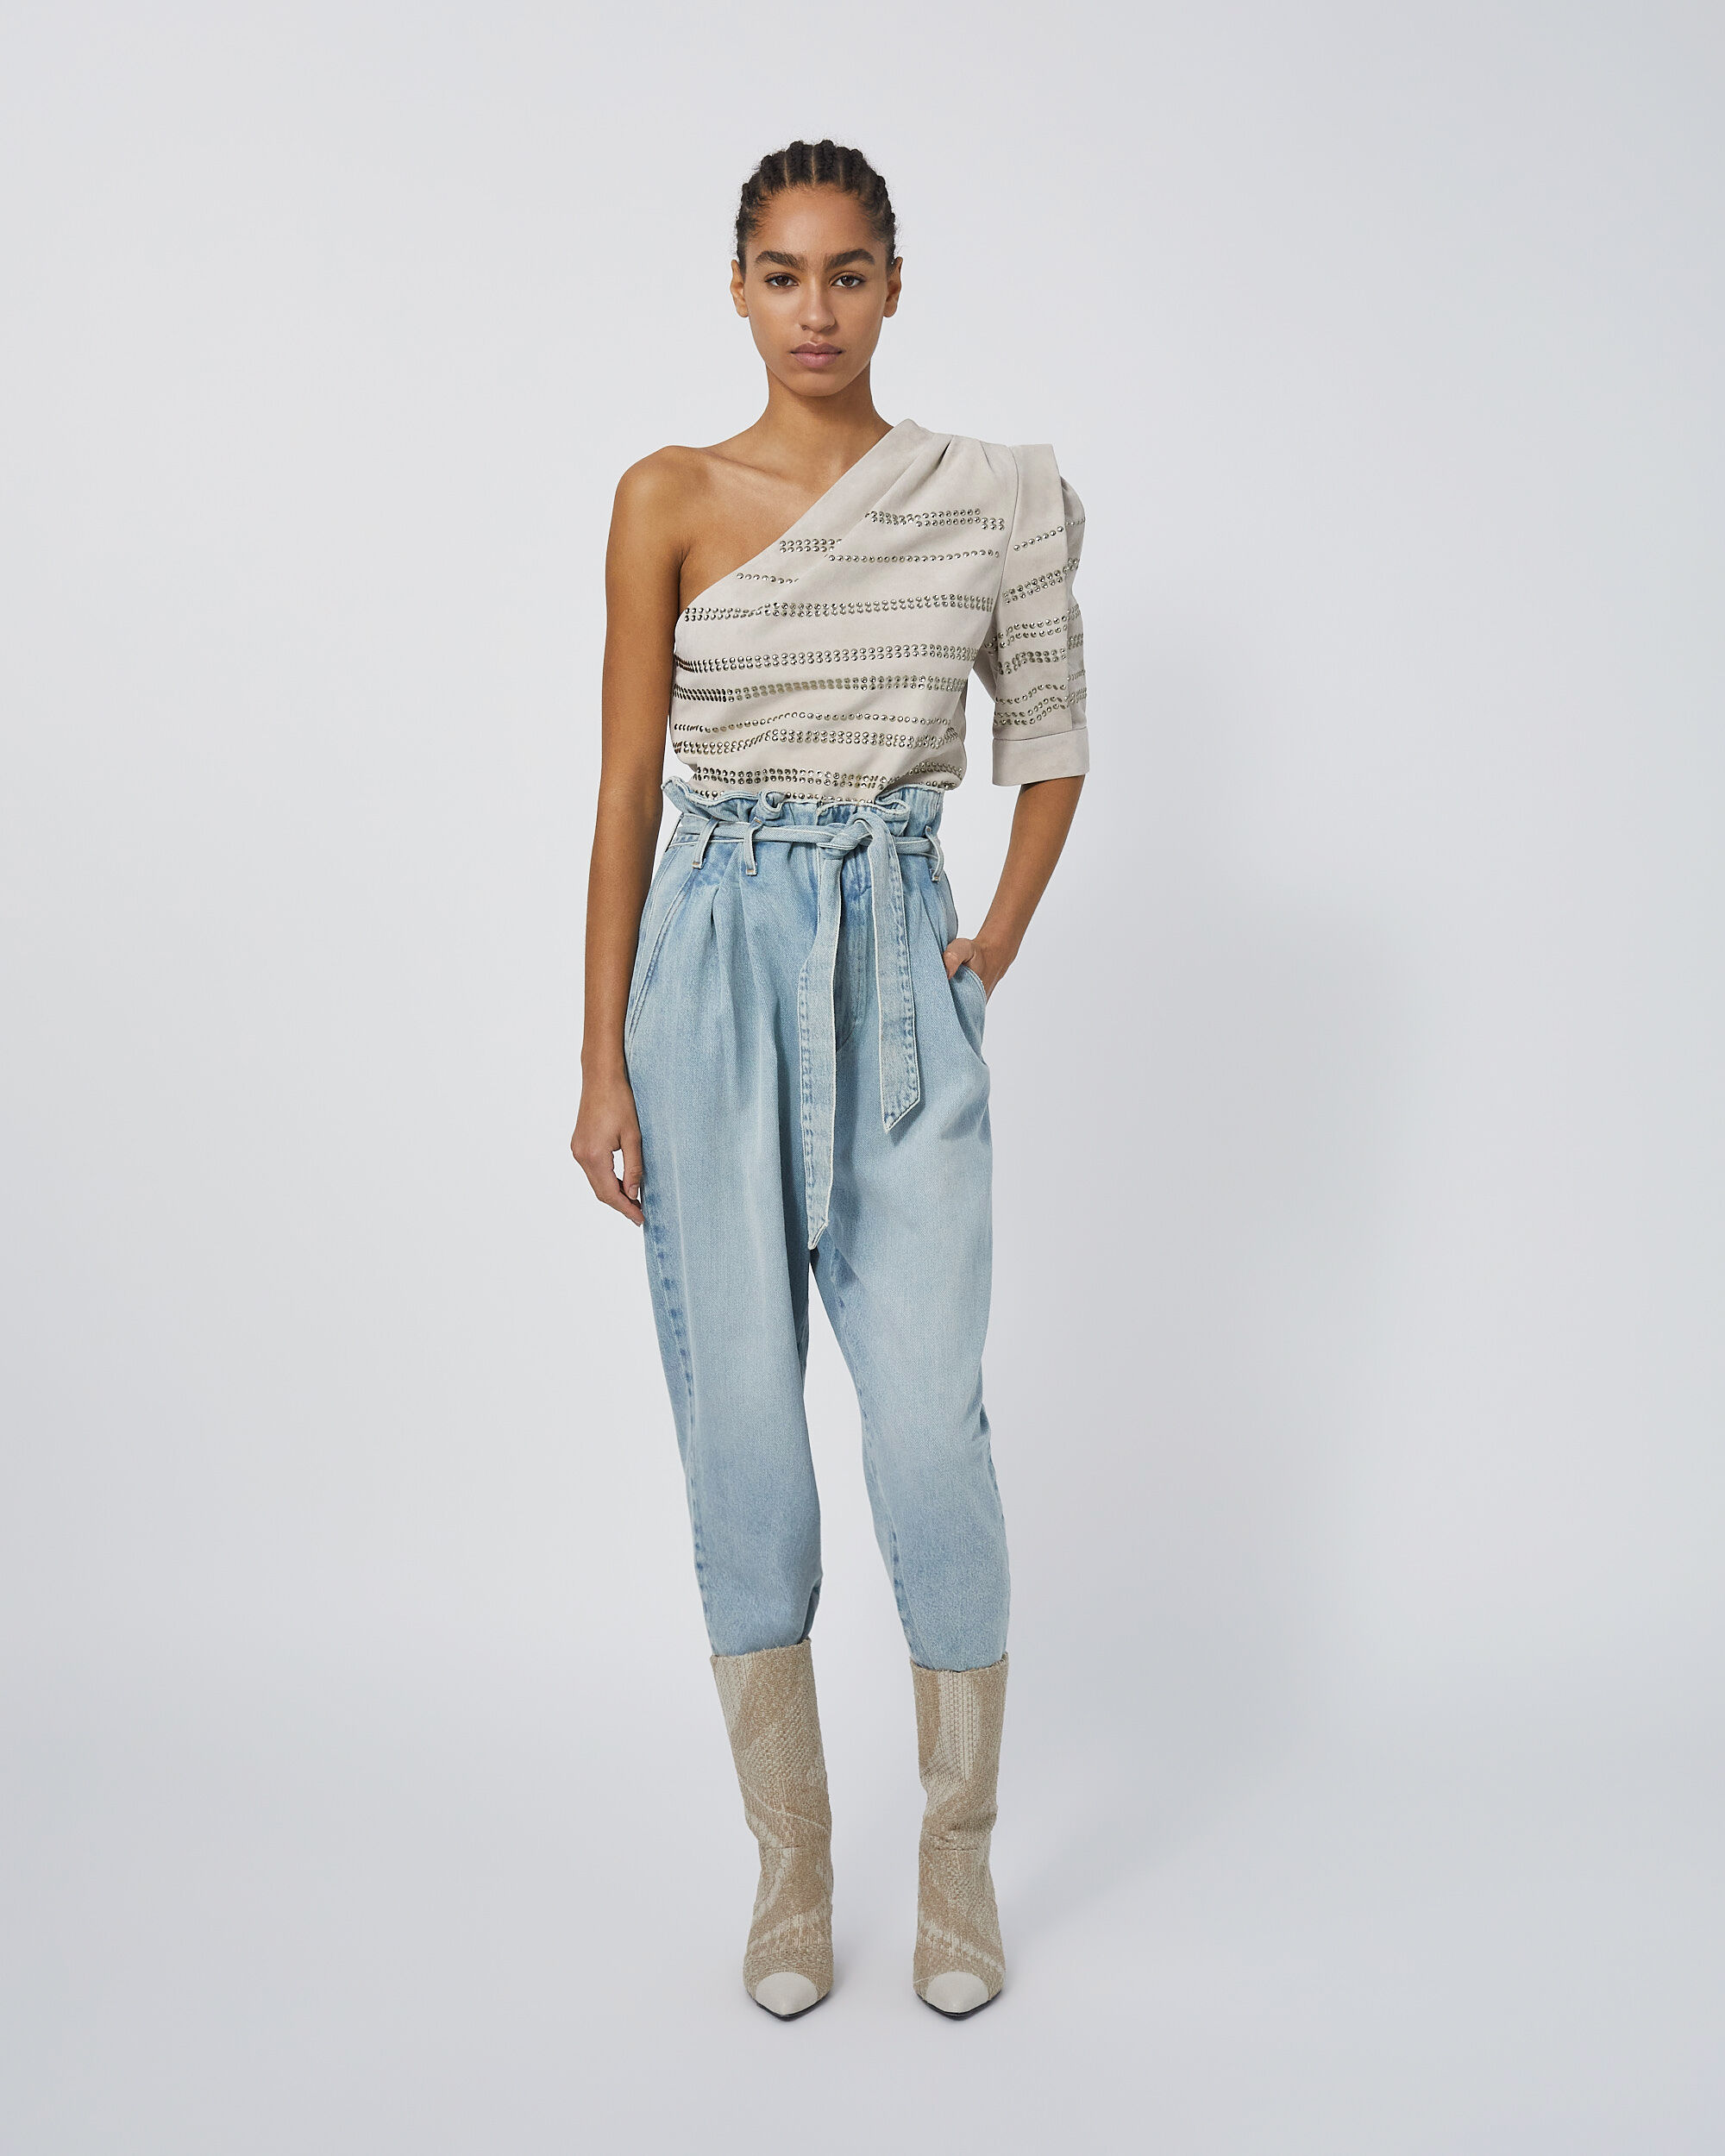 Women's jeans - IRO | Official online store